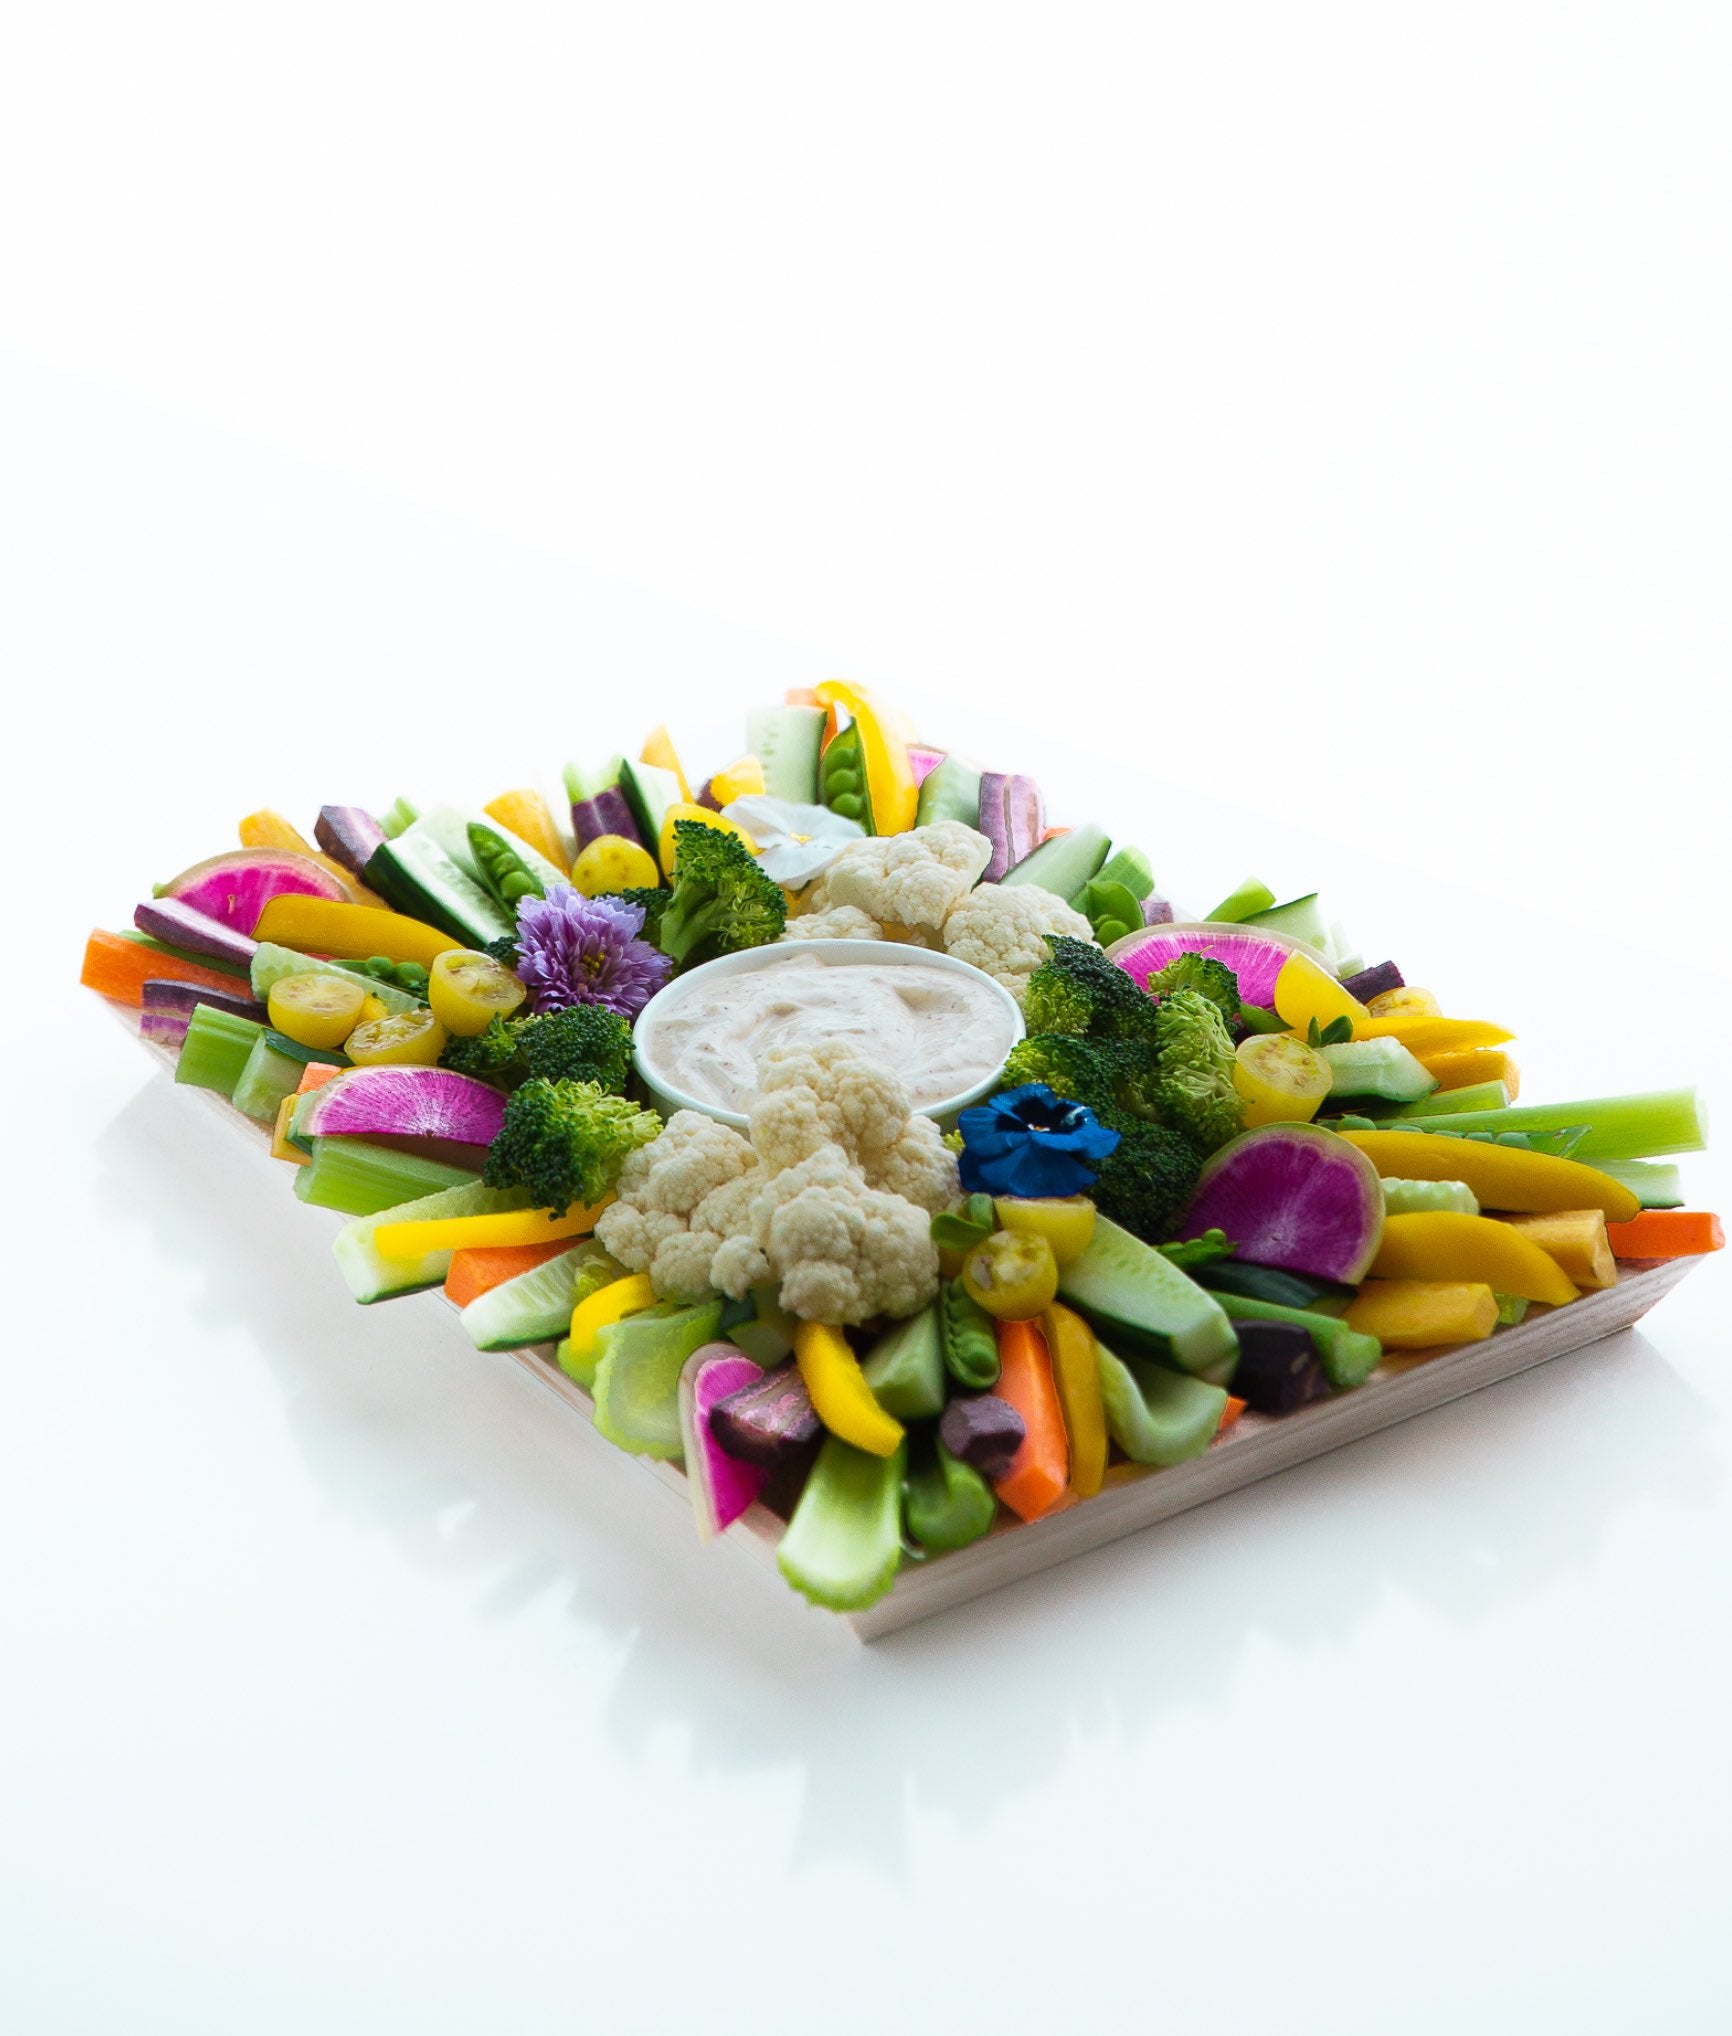 Save 10%: Charcuterie + Sandwiches + Veg. or Fruit Platter Toronto - The Graze Anatomy